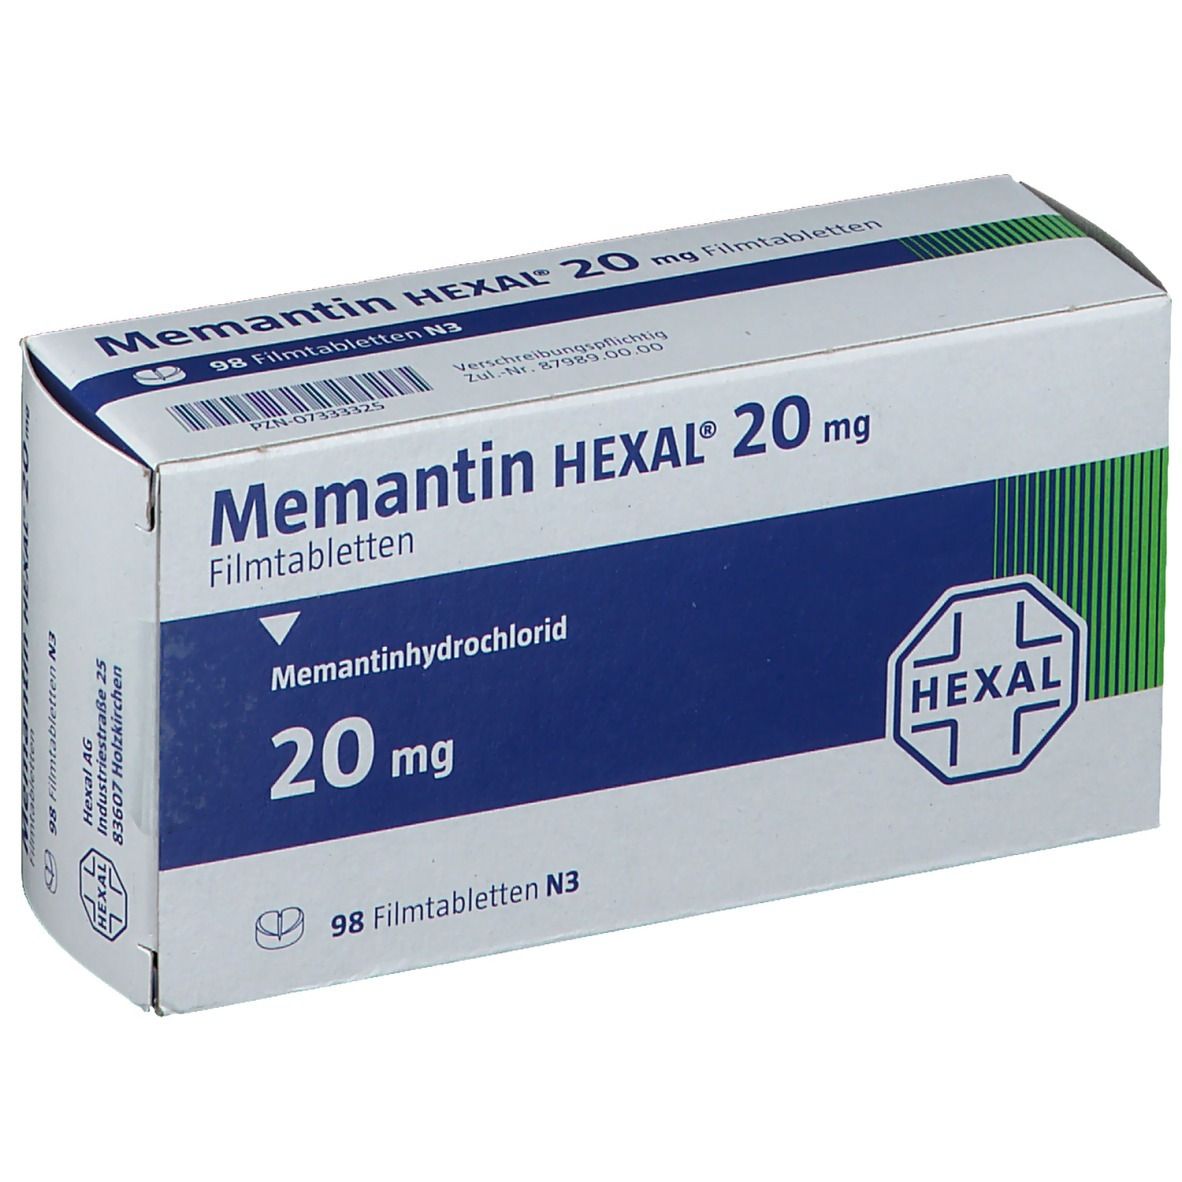 Memantin HEXAL® 20 mg